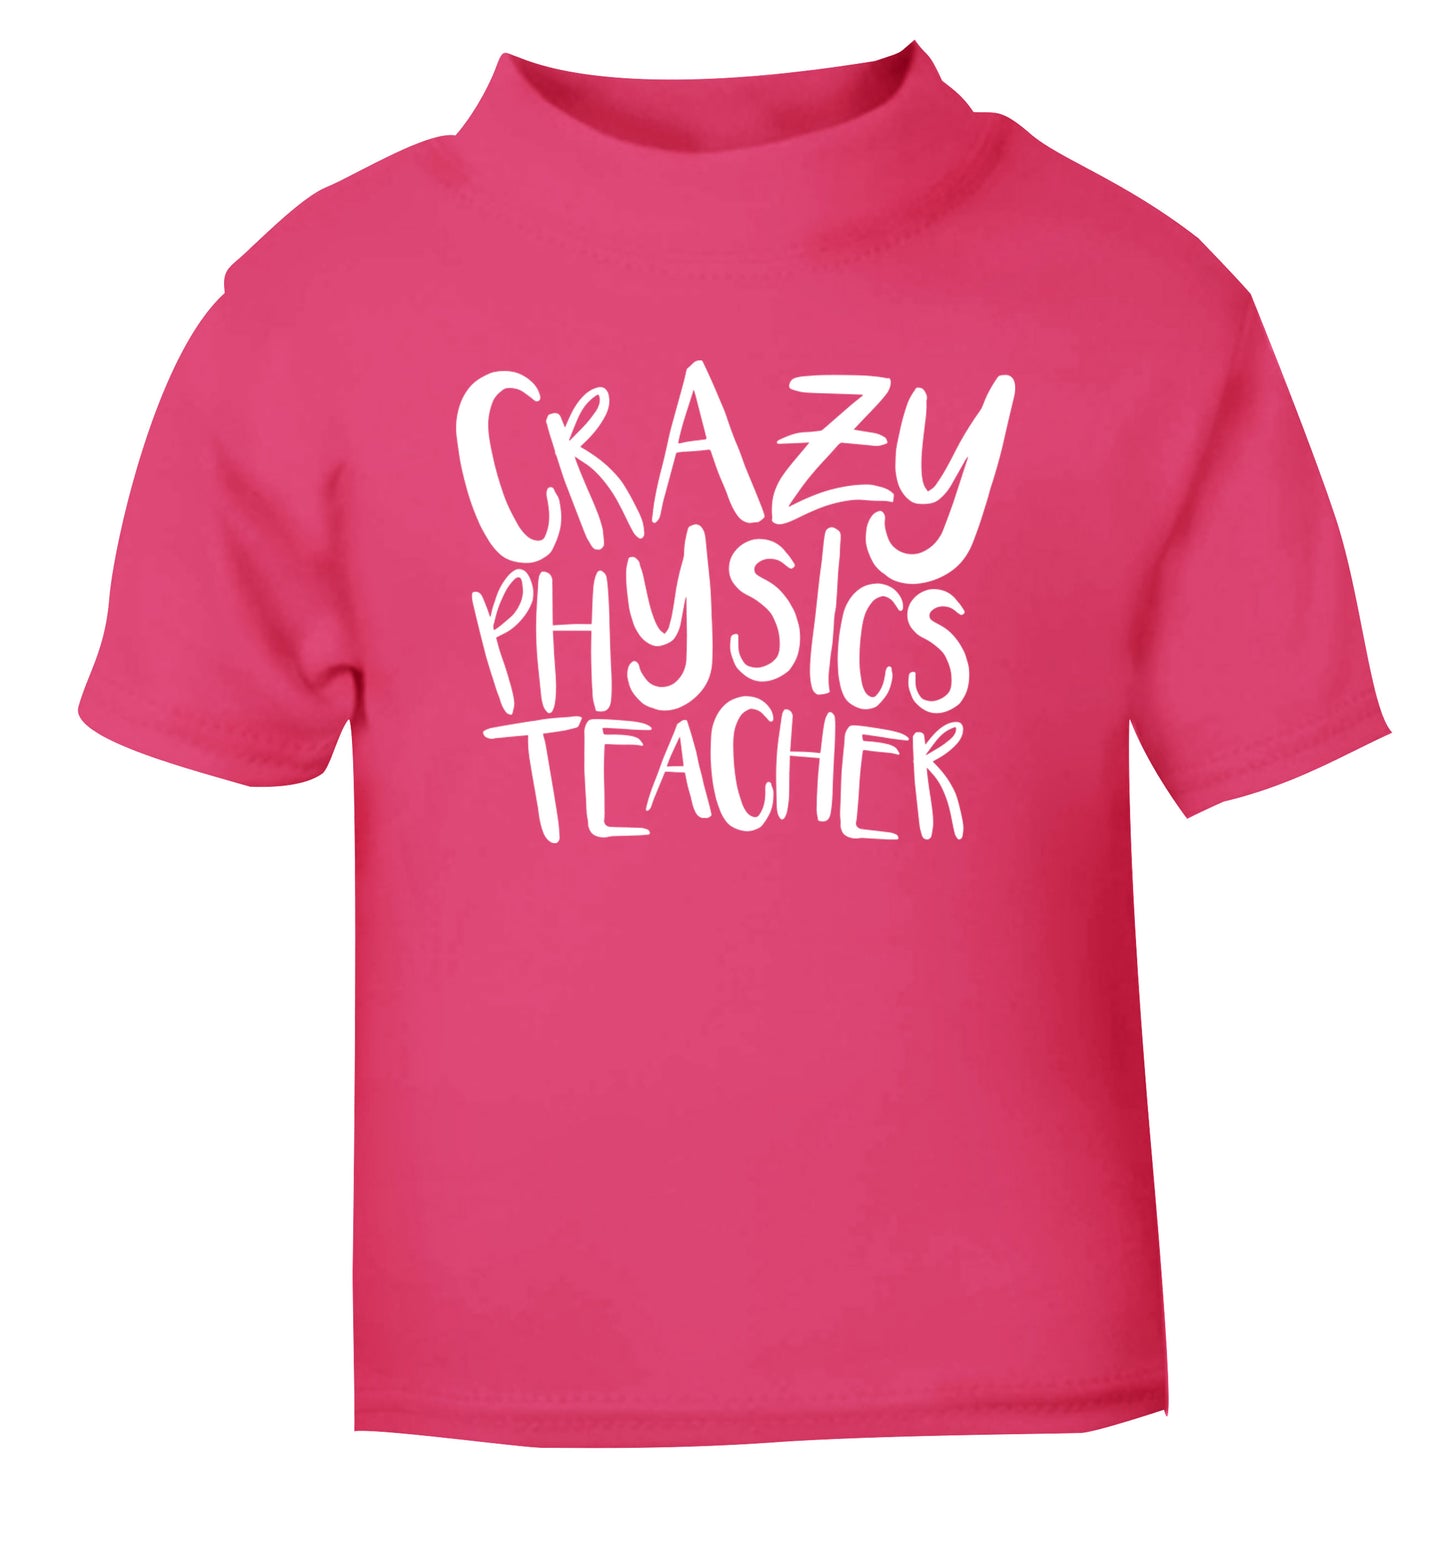 Crazy physics teacher pink Baby Toddler Tshirt 2 Years